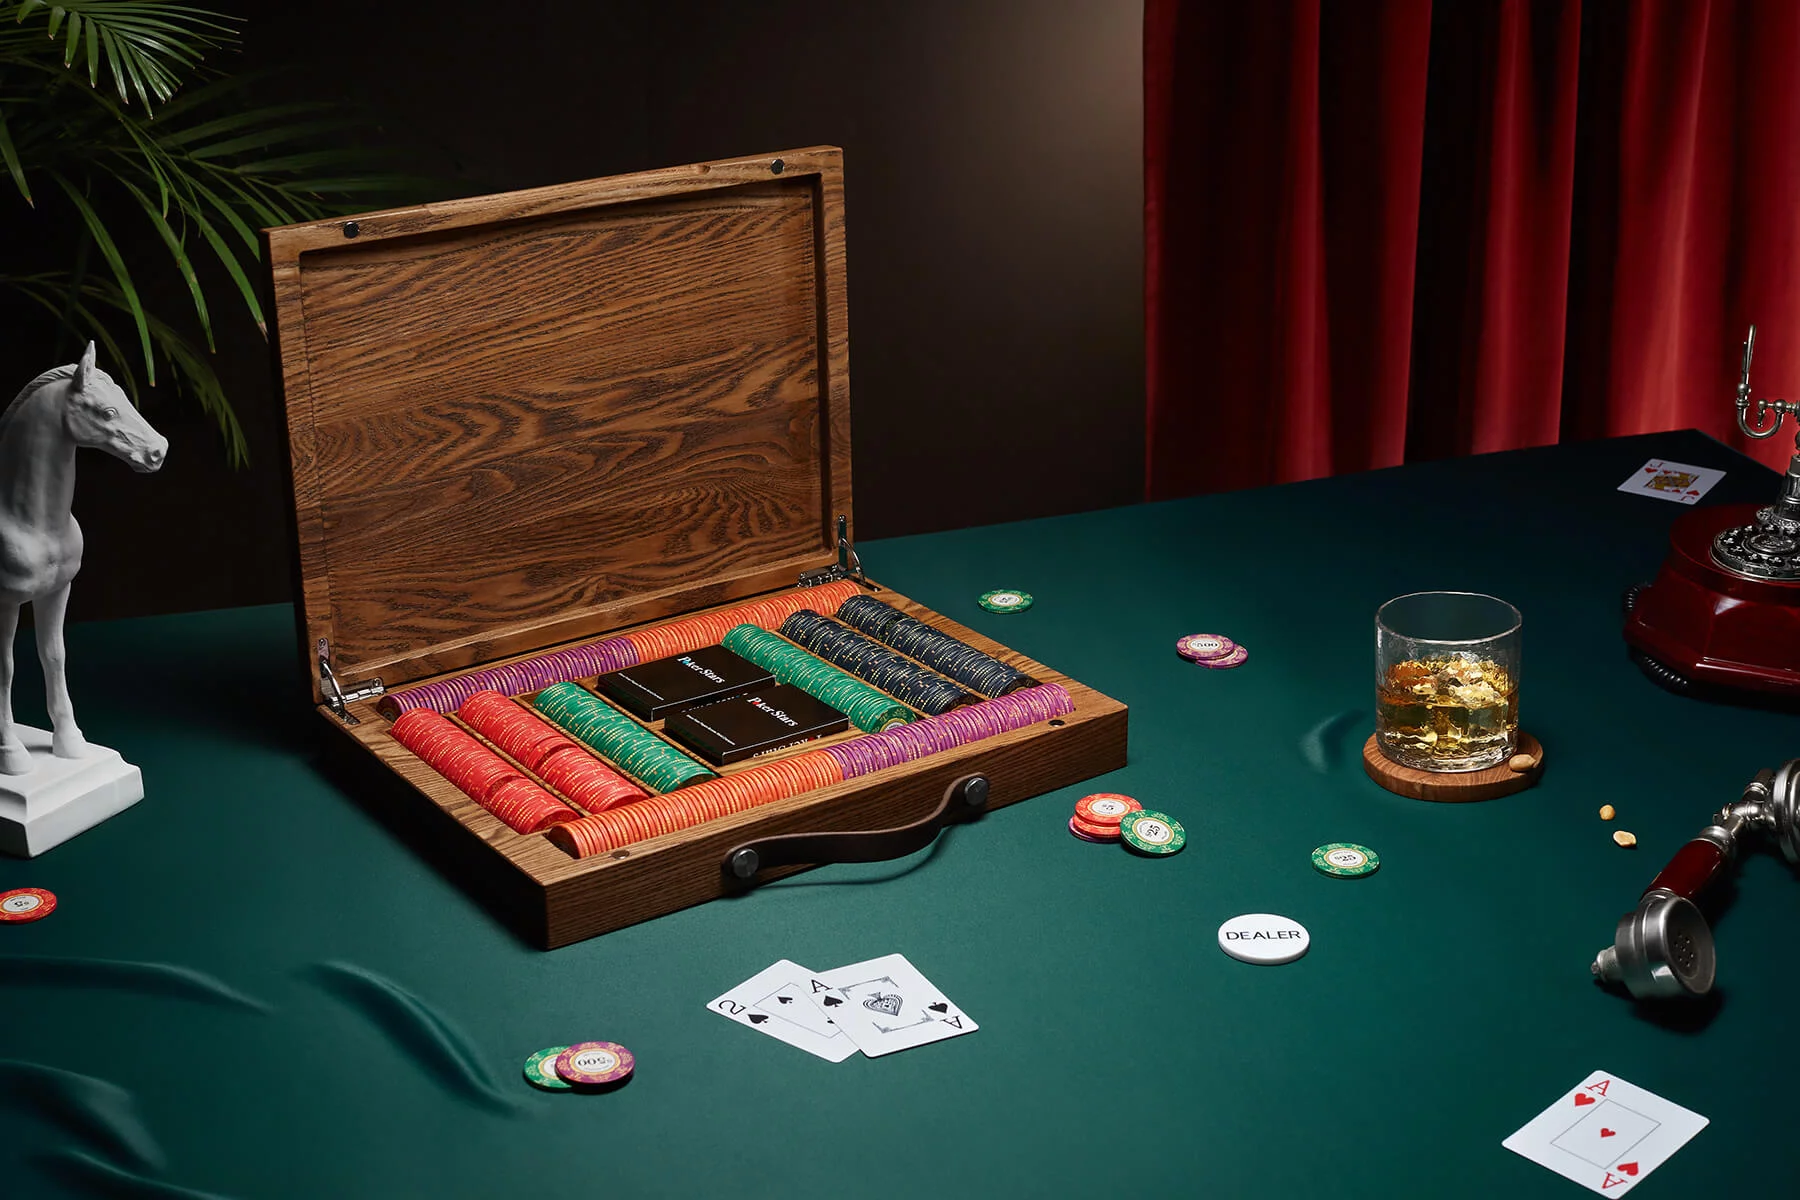 Cartamundi Luxury Poker Set